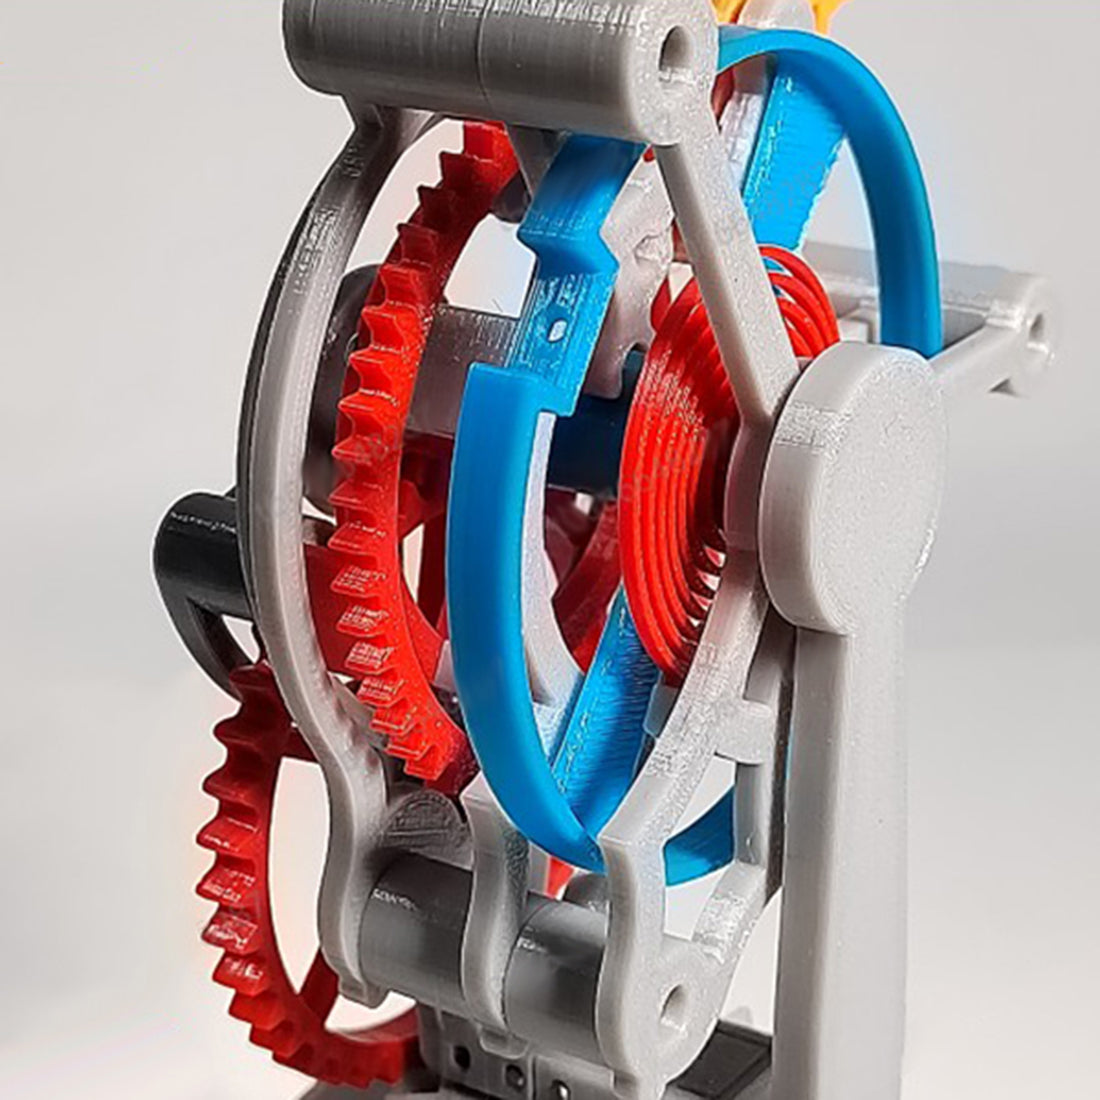 3D Printed Triple-Axis Tourbillon Clock Model DIY Assembly Toys